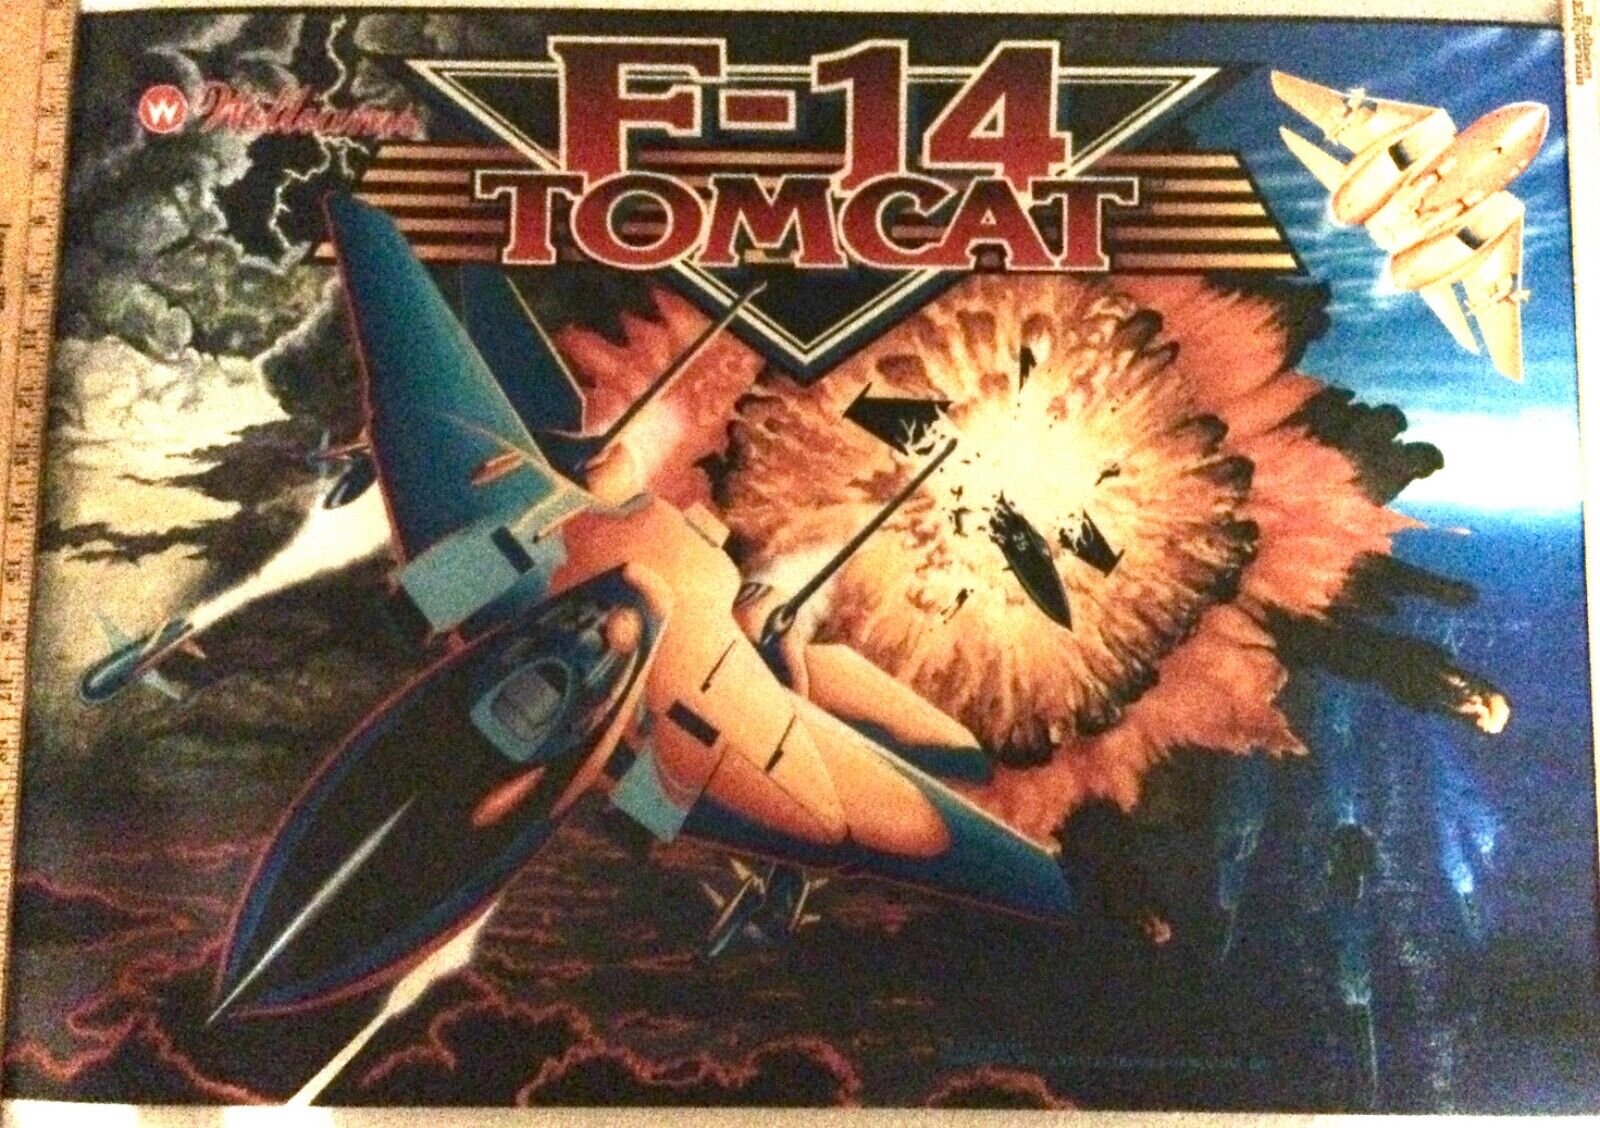 ORIGINAL Williams “F-14 Tomcat” Pinball Machine Translite - NOS - **RARE**